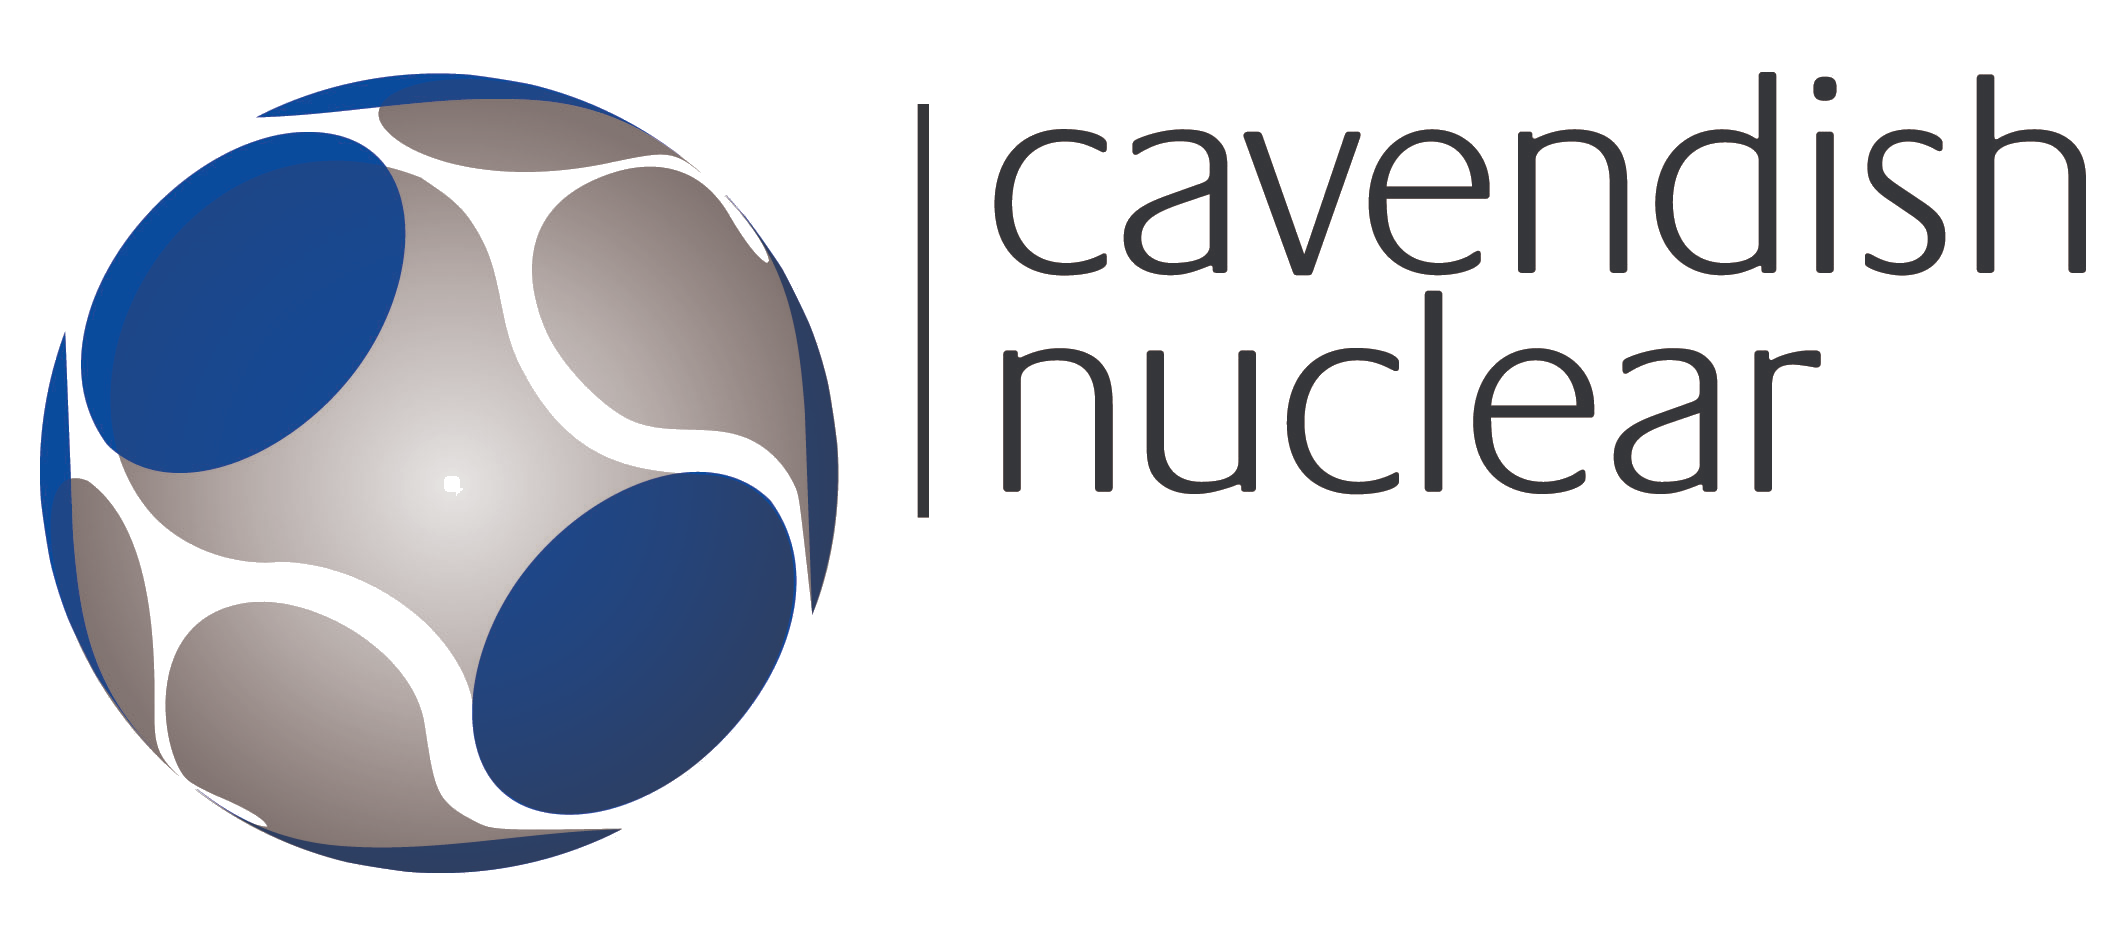 Cavendish Nuclear - Logo